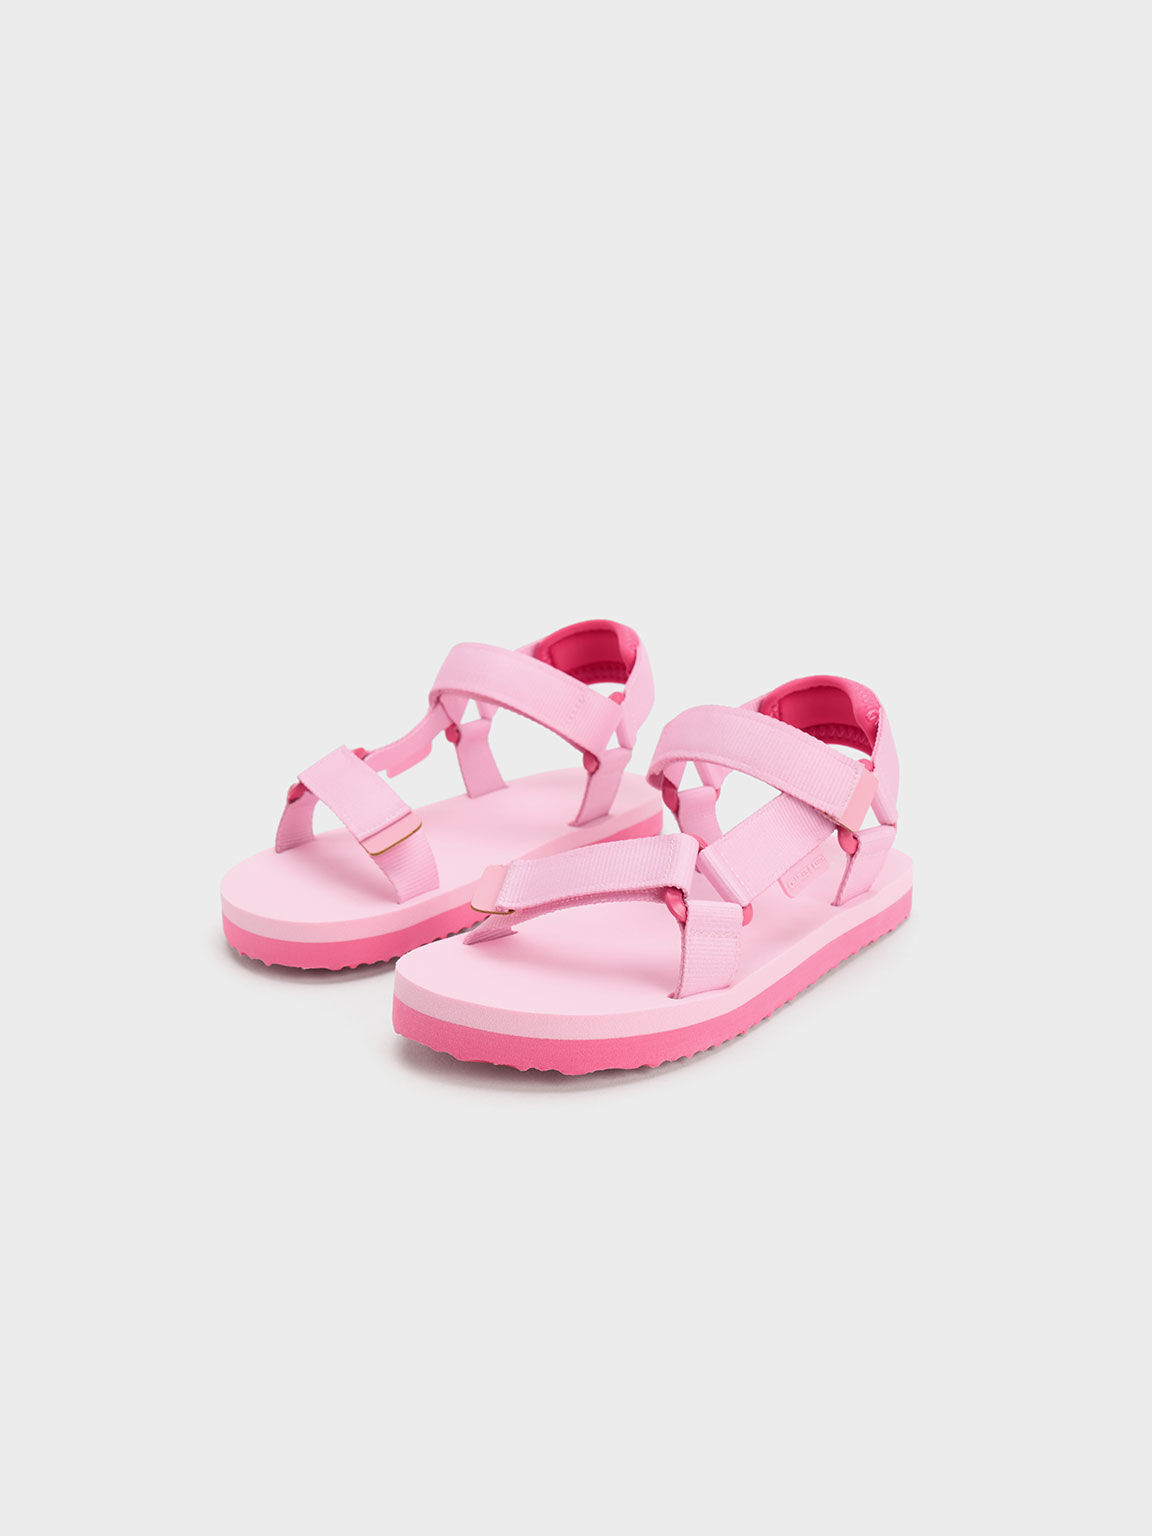 Girls' Grosgrain Sporty Sandals, Pink, hi-res